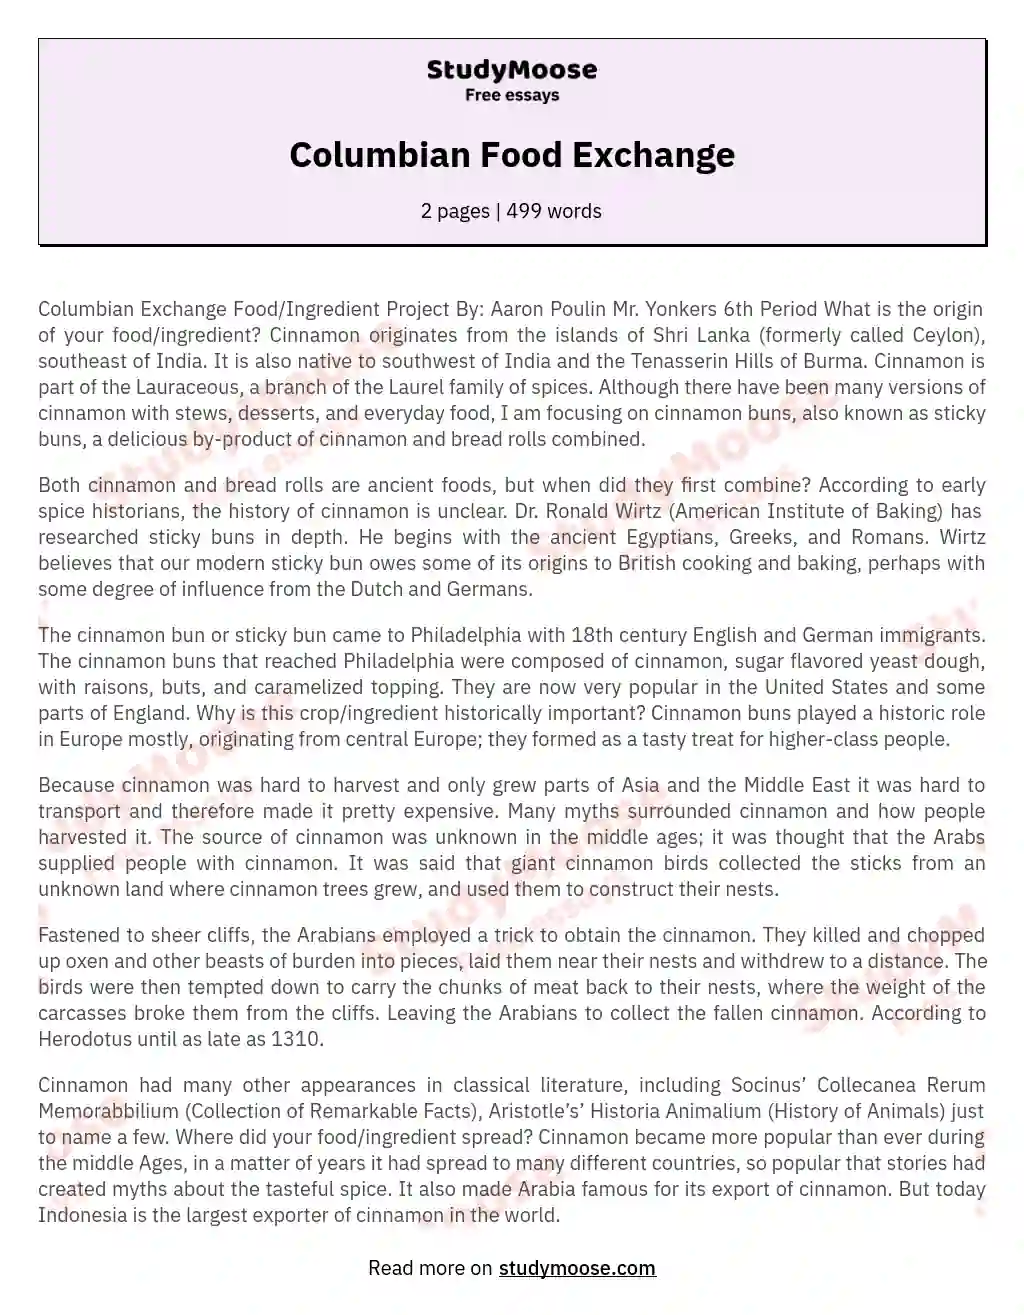 Columbian Food Exchange essay